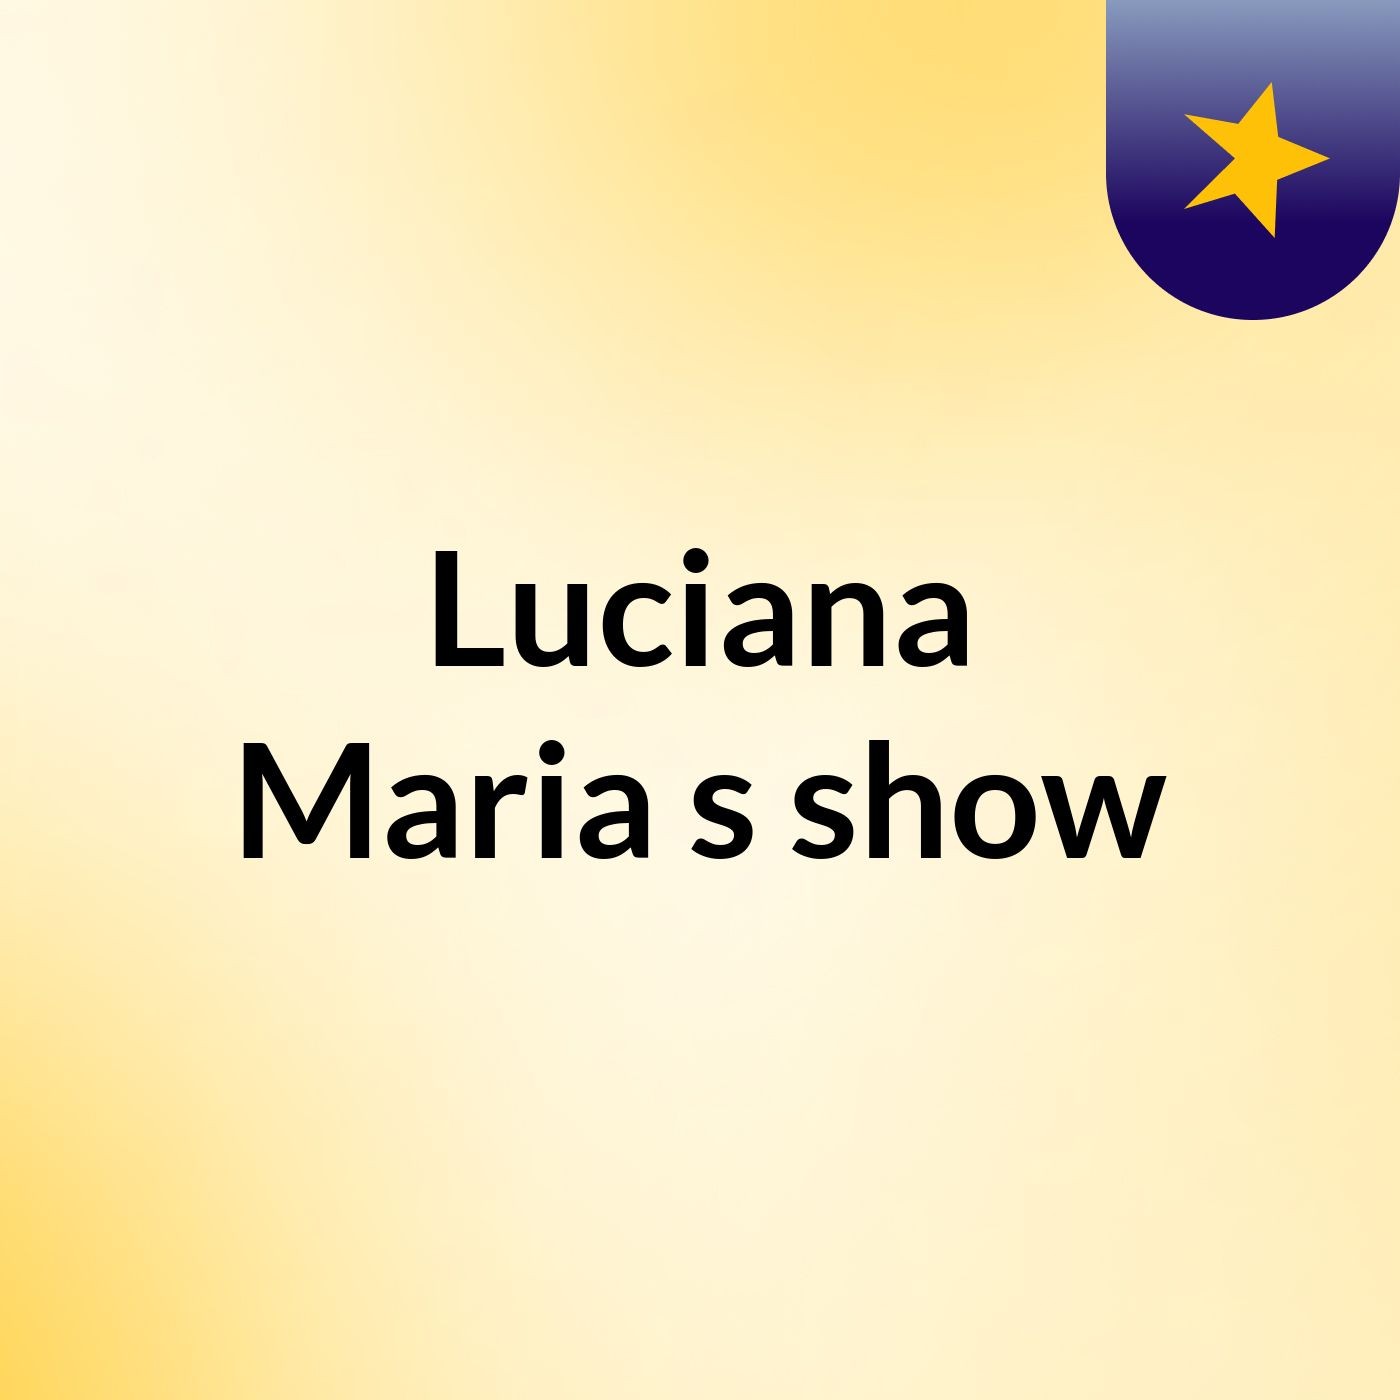 Luciana Maria's show